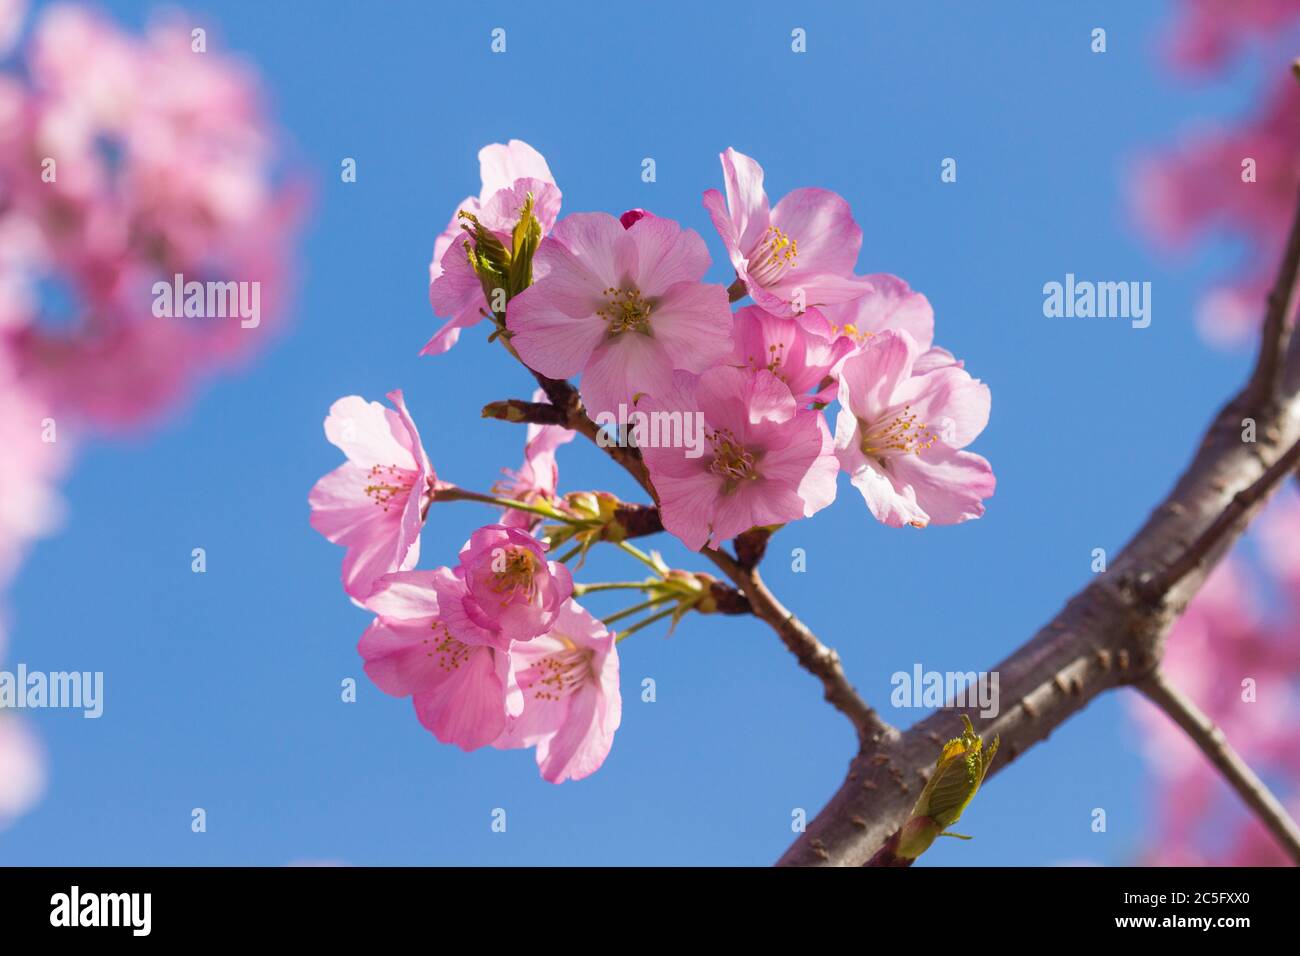 Macro / Closeup of pink Japanese cherry blossoms / pink sakura / Prunus serrulata against a blue sky, Washington, D.C., United States Stock Photo